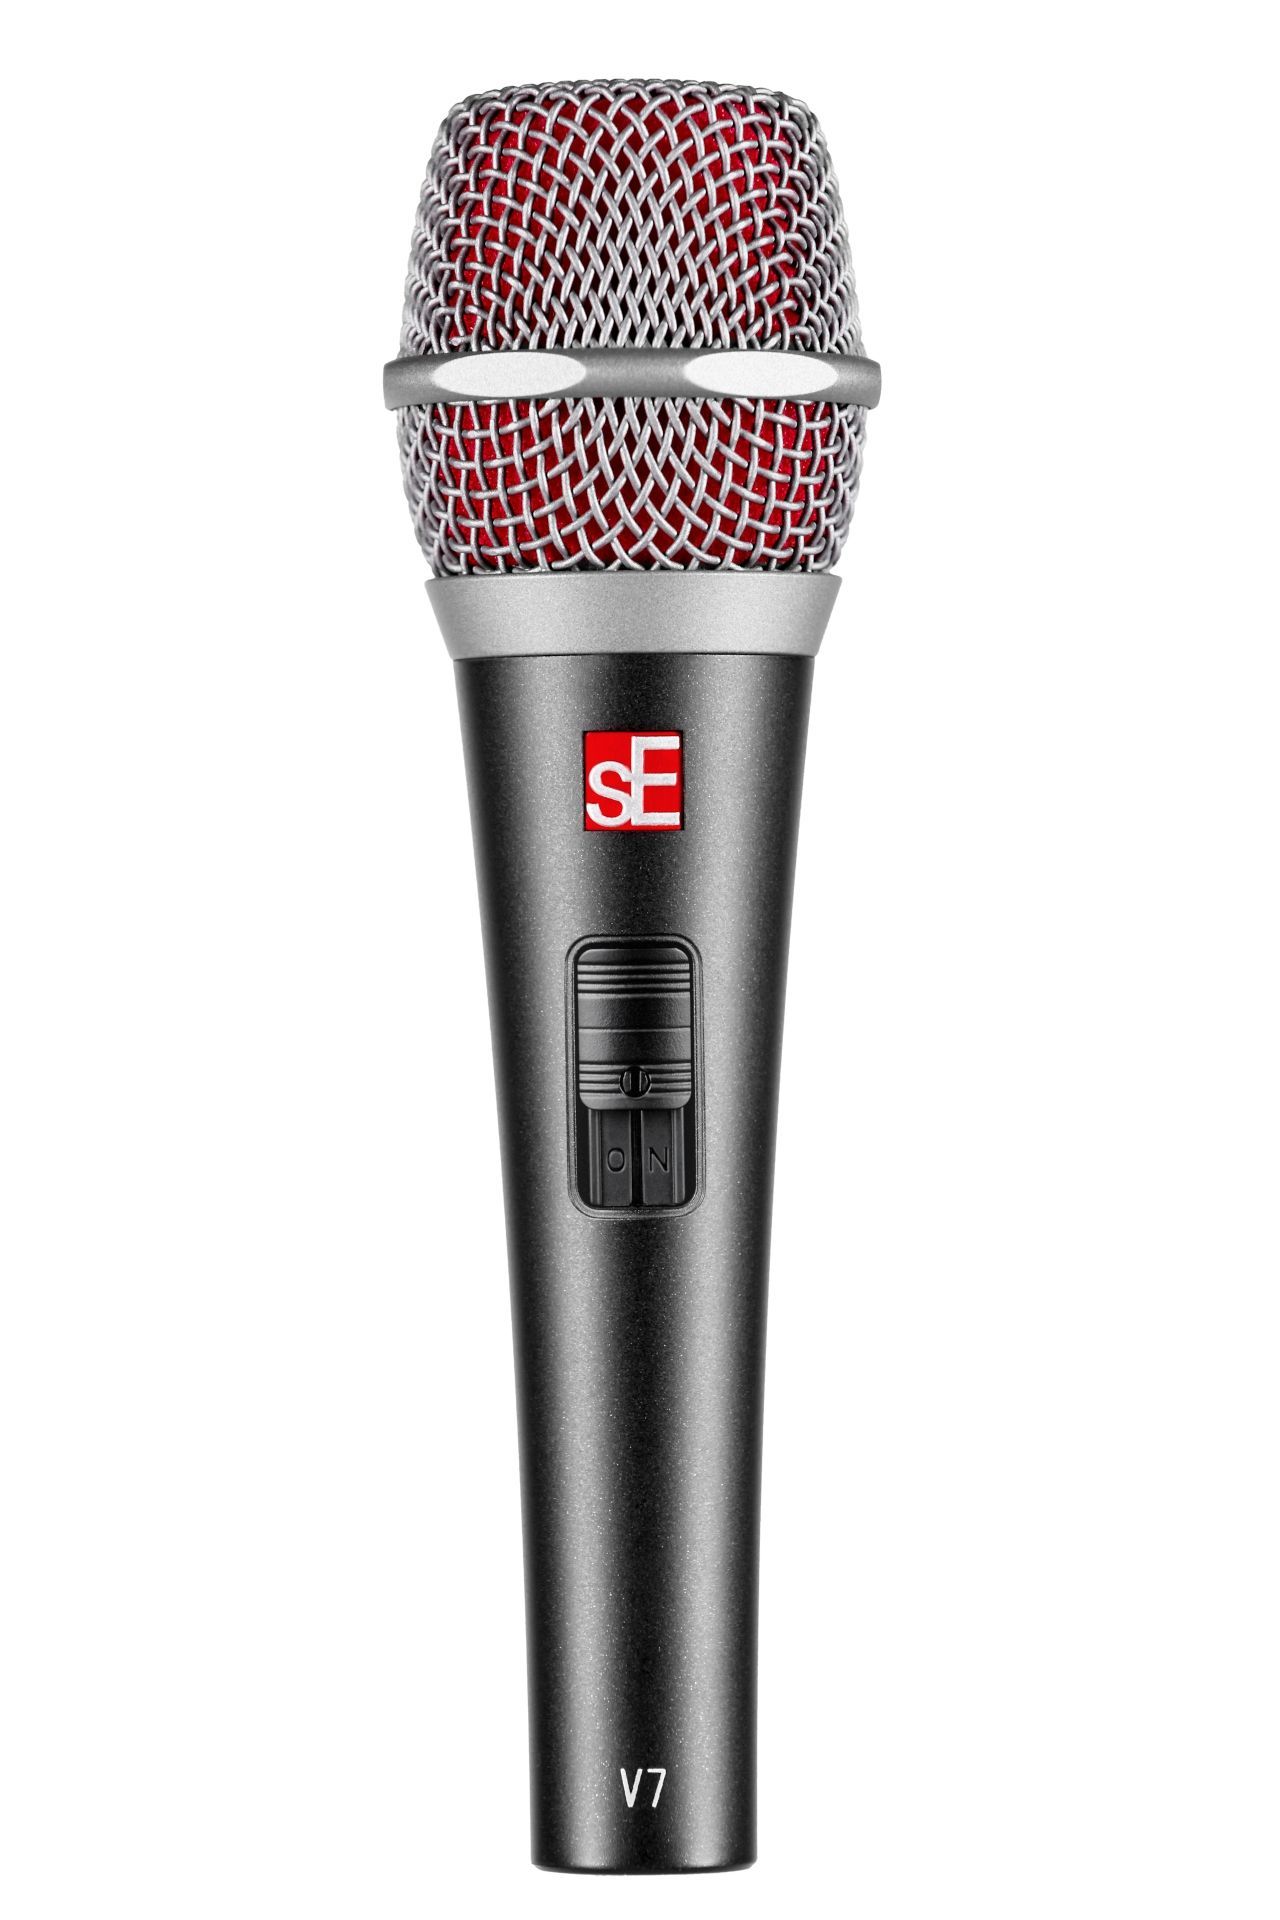 SE Electronics V7 Switch Gesangsmikrofon mit Schalter, dynamisch, Superniere